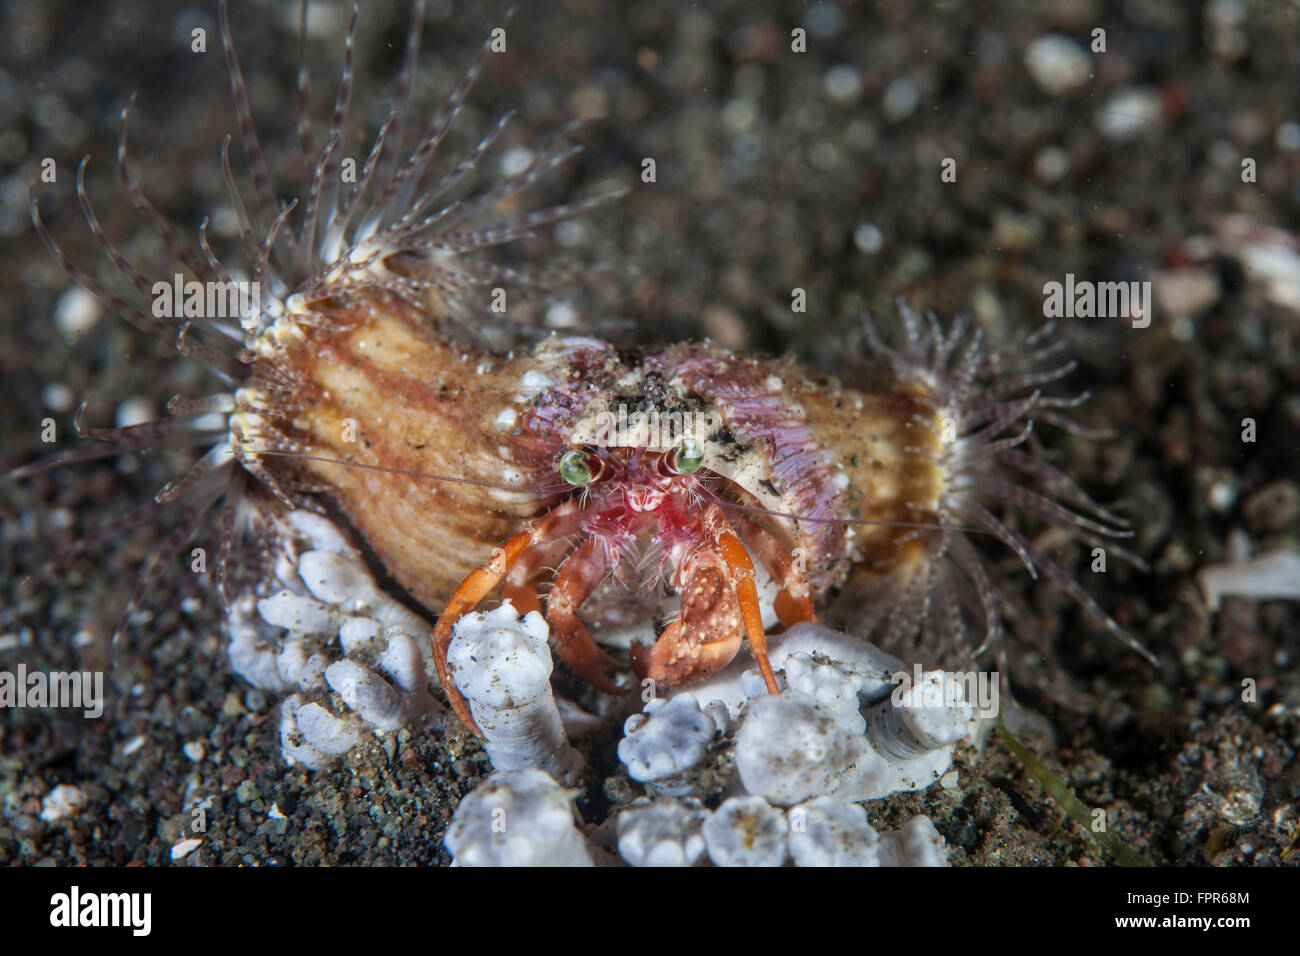 An anemone hermit crab (Dardanus pedunculatus) crawls across the seafloor of Komodo National Park, Indonesia. This beautiful are Stock Photo